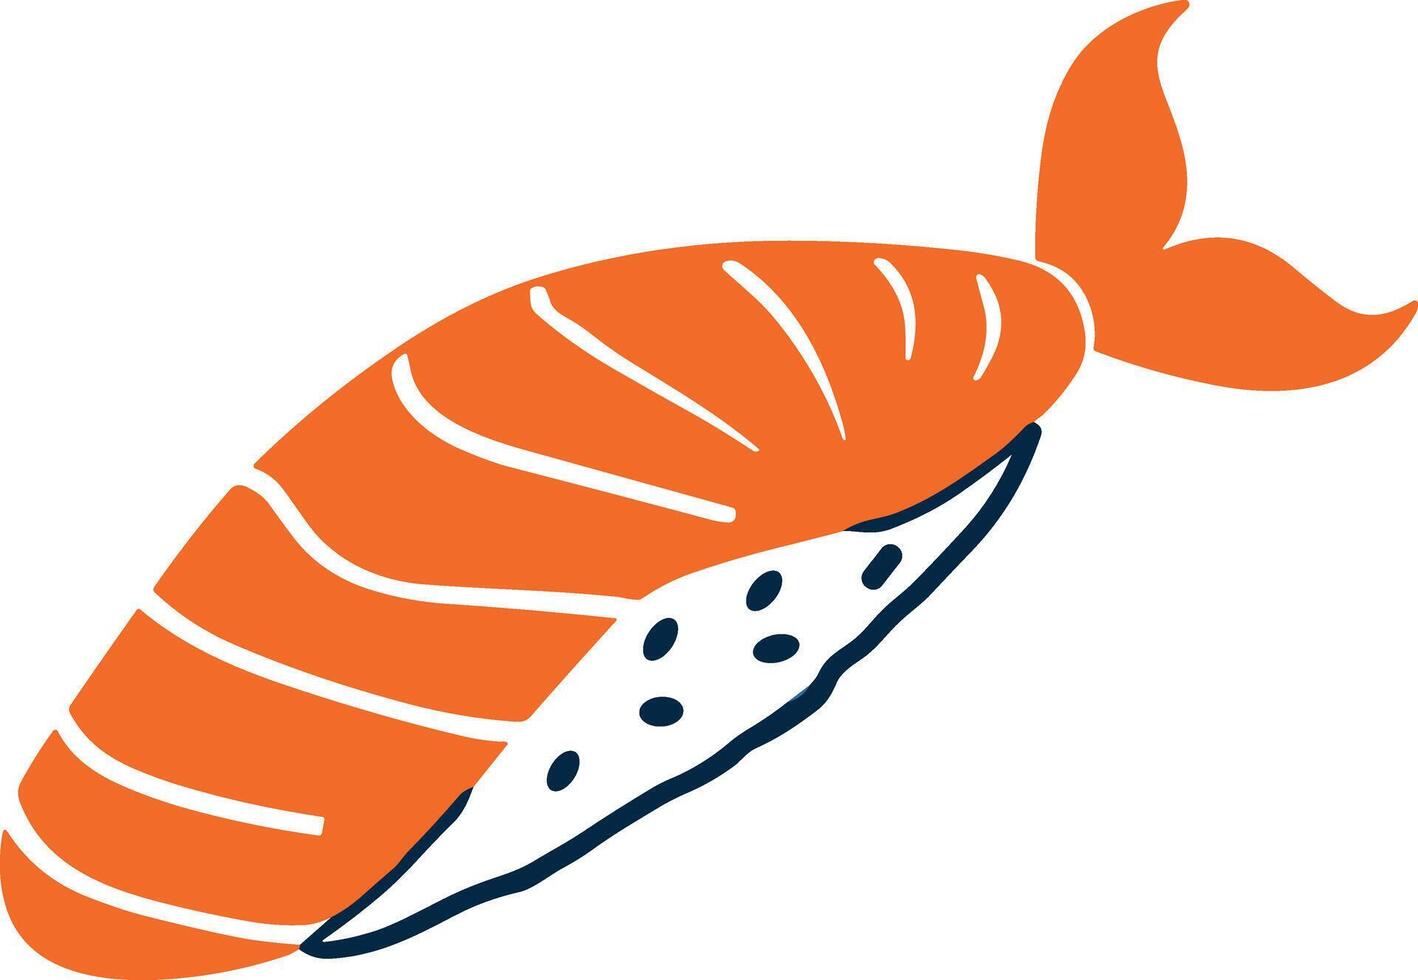 isolate salmon sushi flat style on background vector